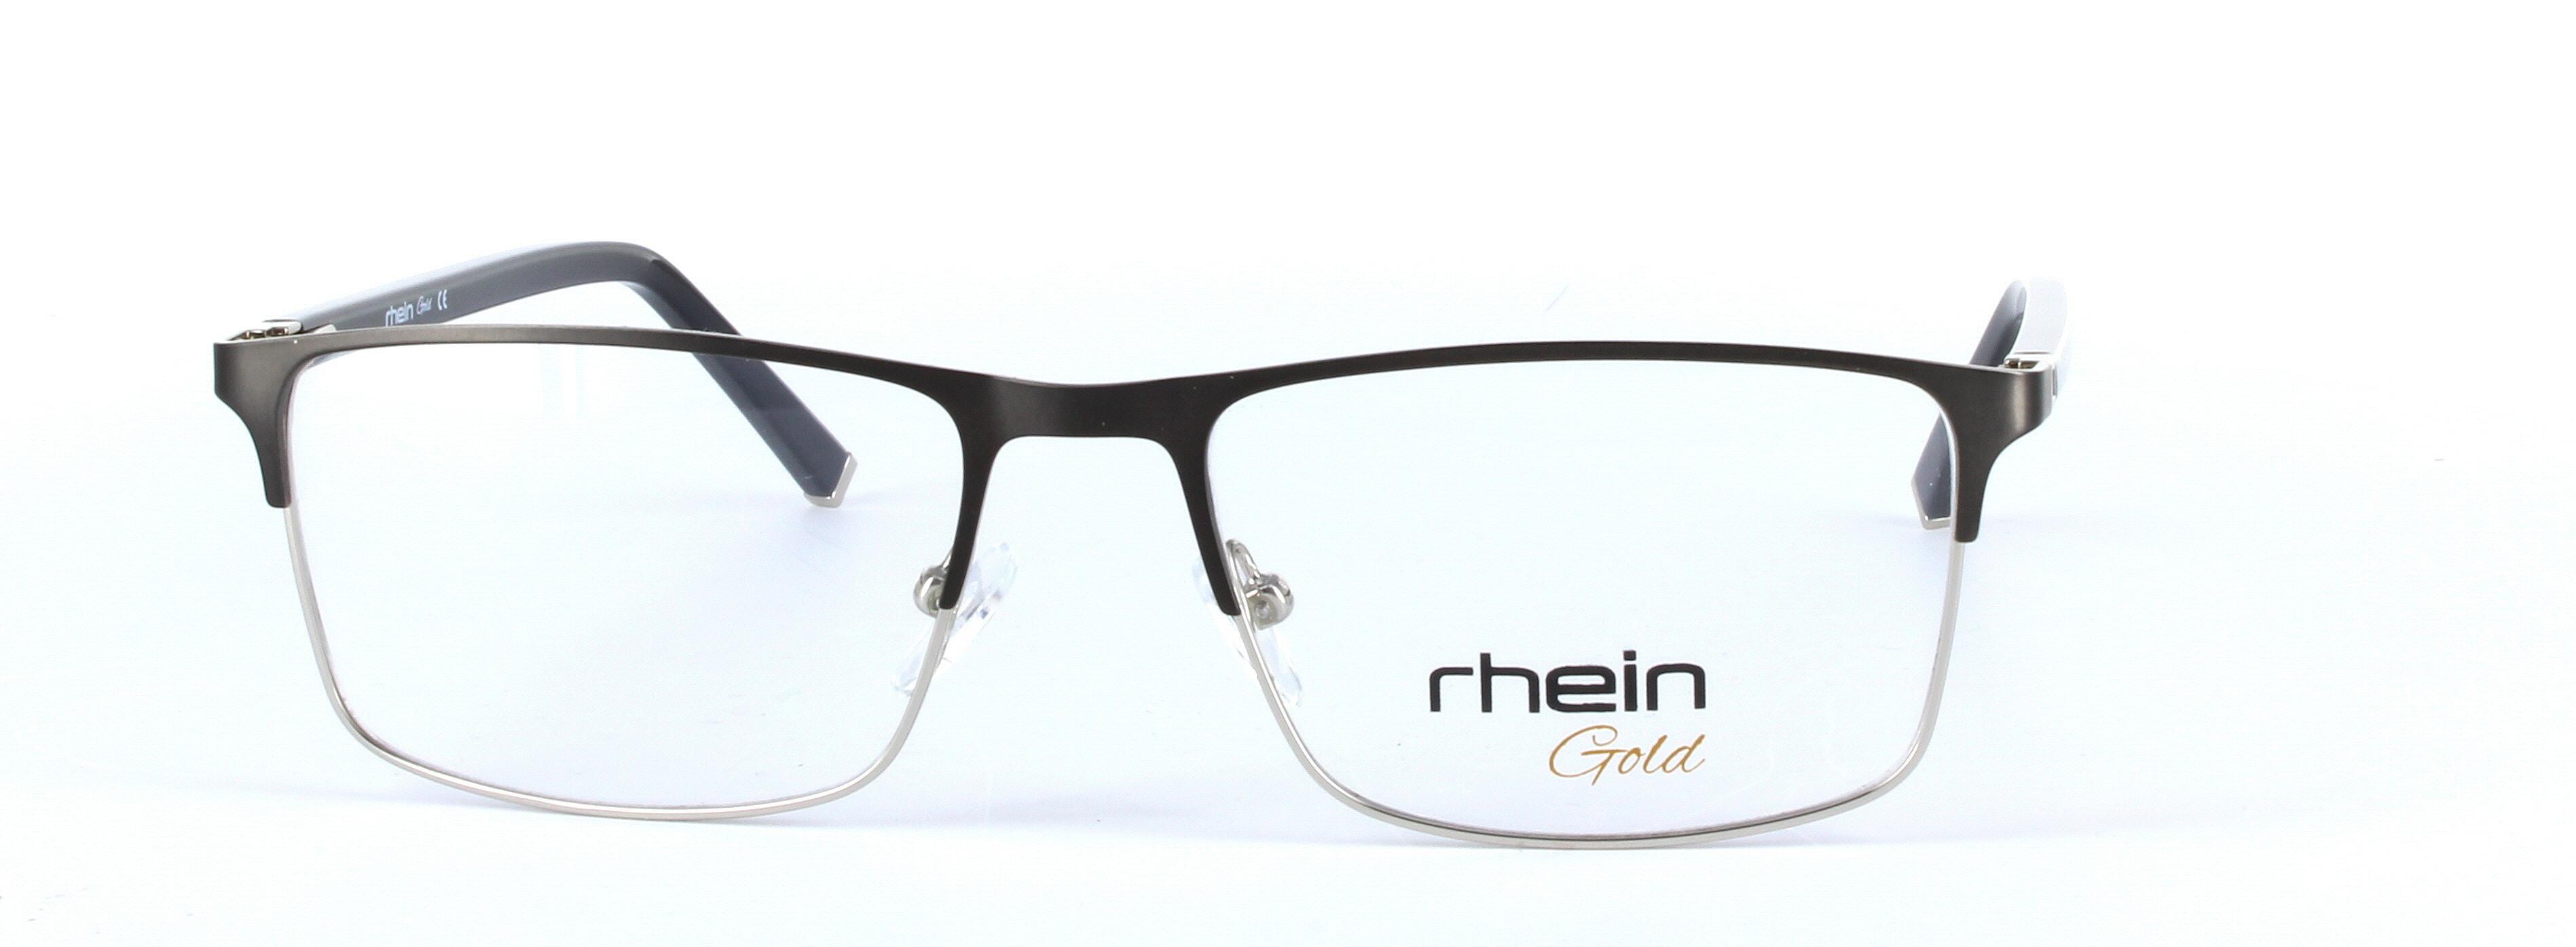 Faith Brown Full Rim Oval Rectangular Metal Glasses - Image View 5